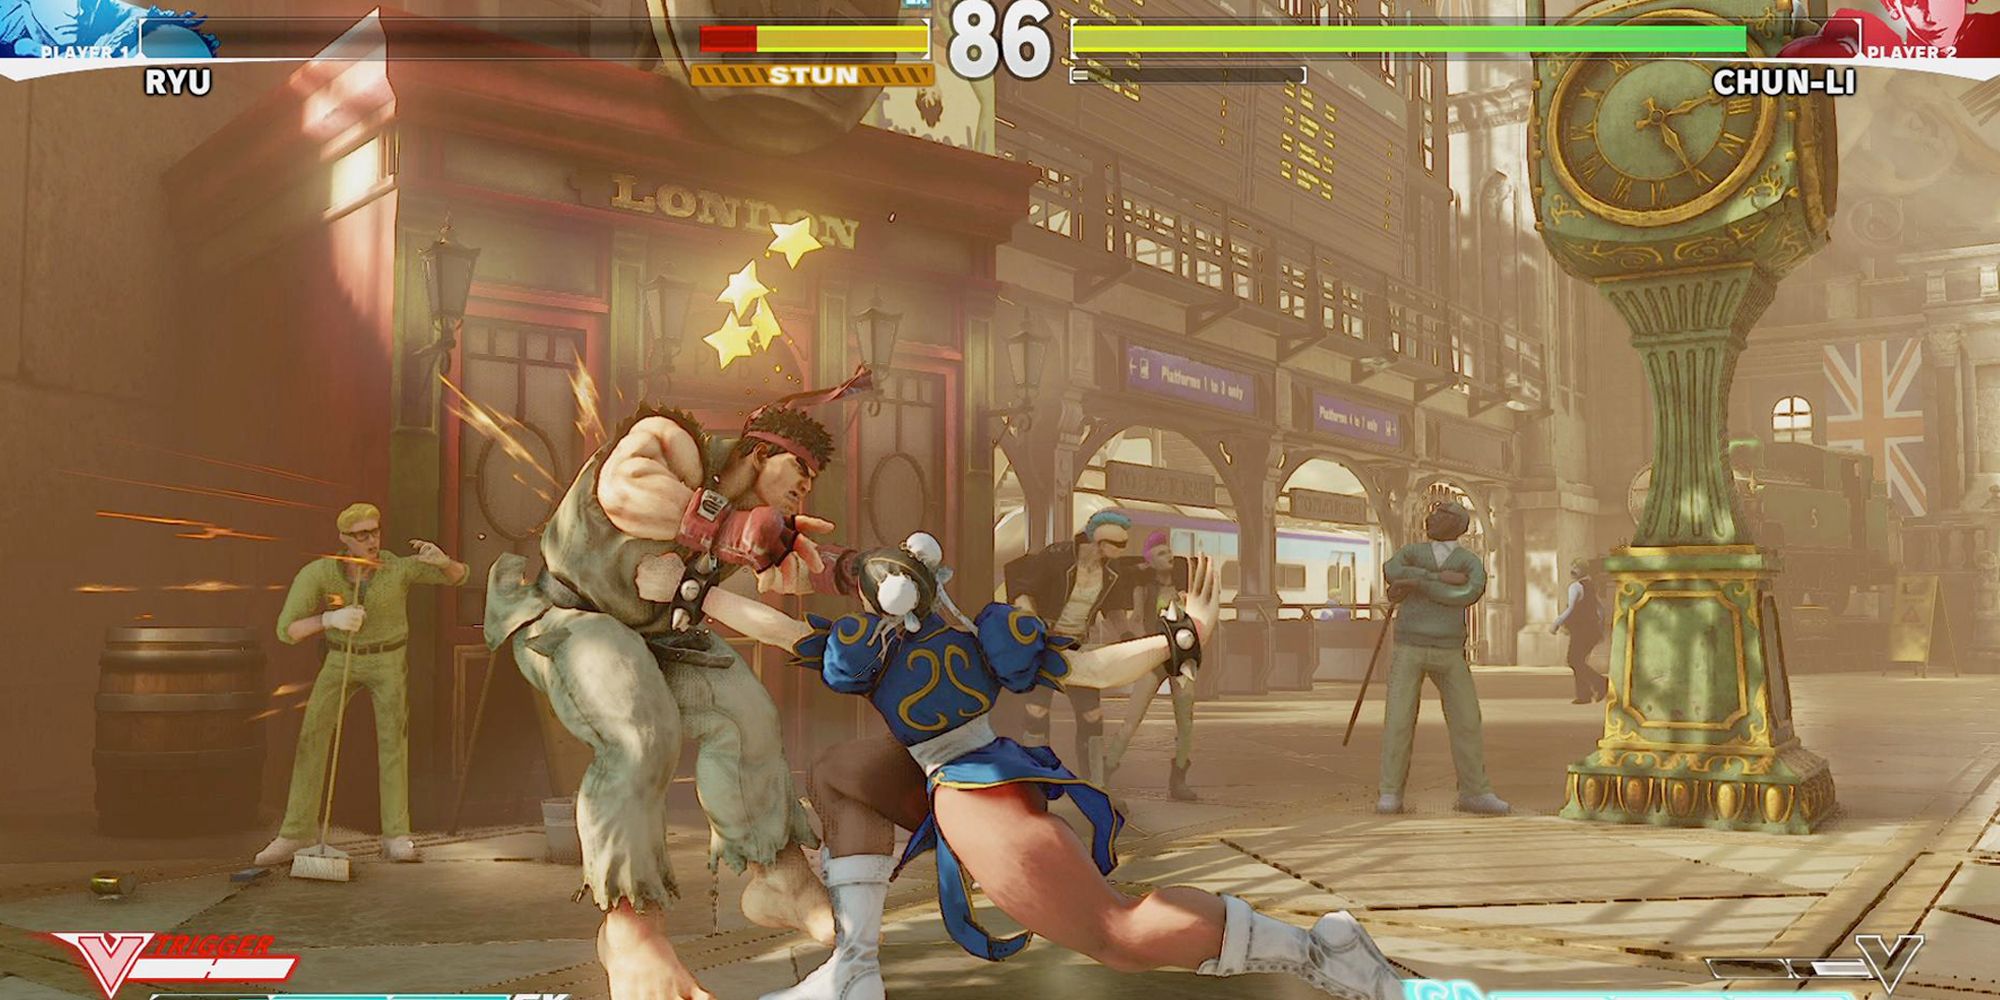 Chun Li stuns Ryu with her fists in Street Fighter V